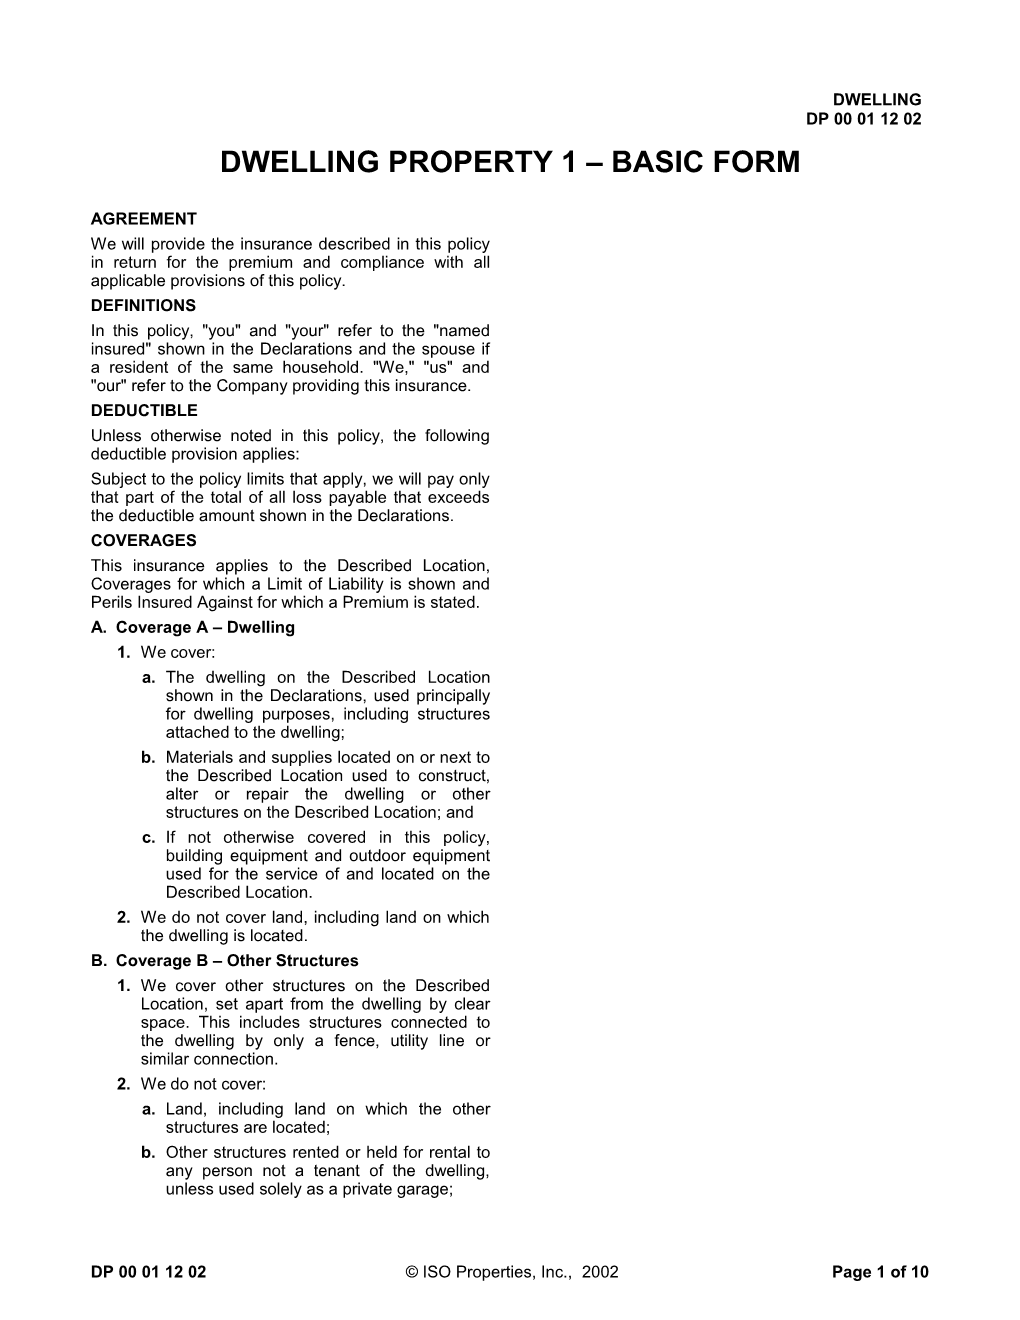 Dwelling Property 2 - Broad Form